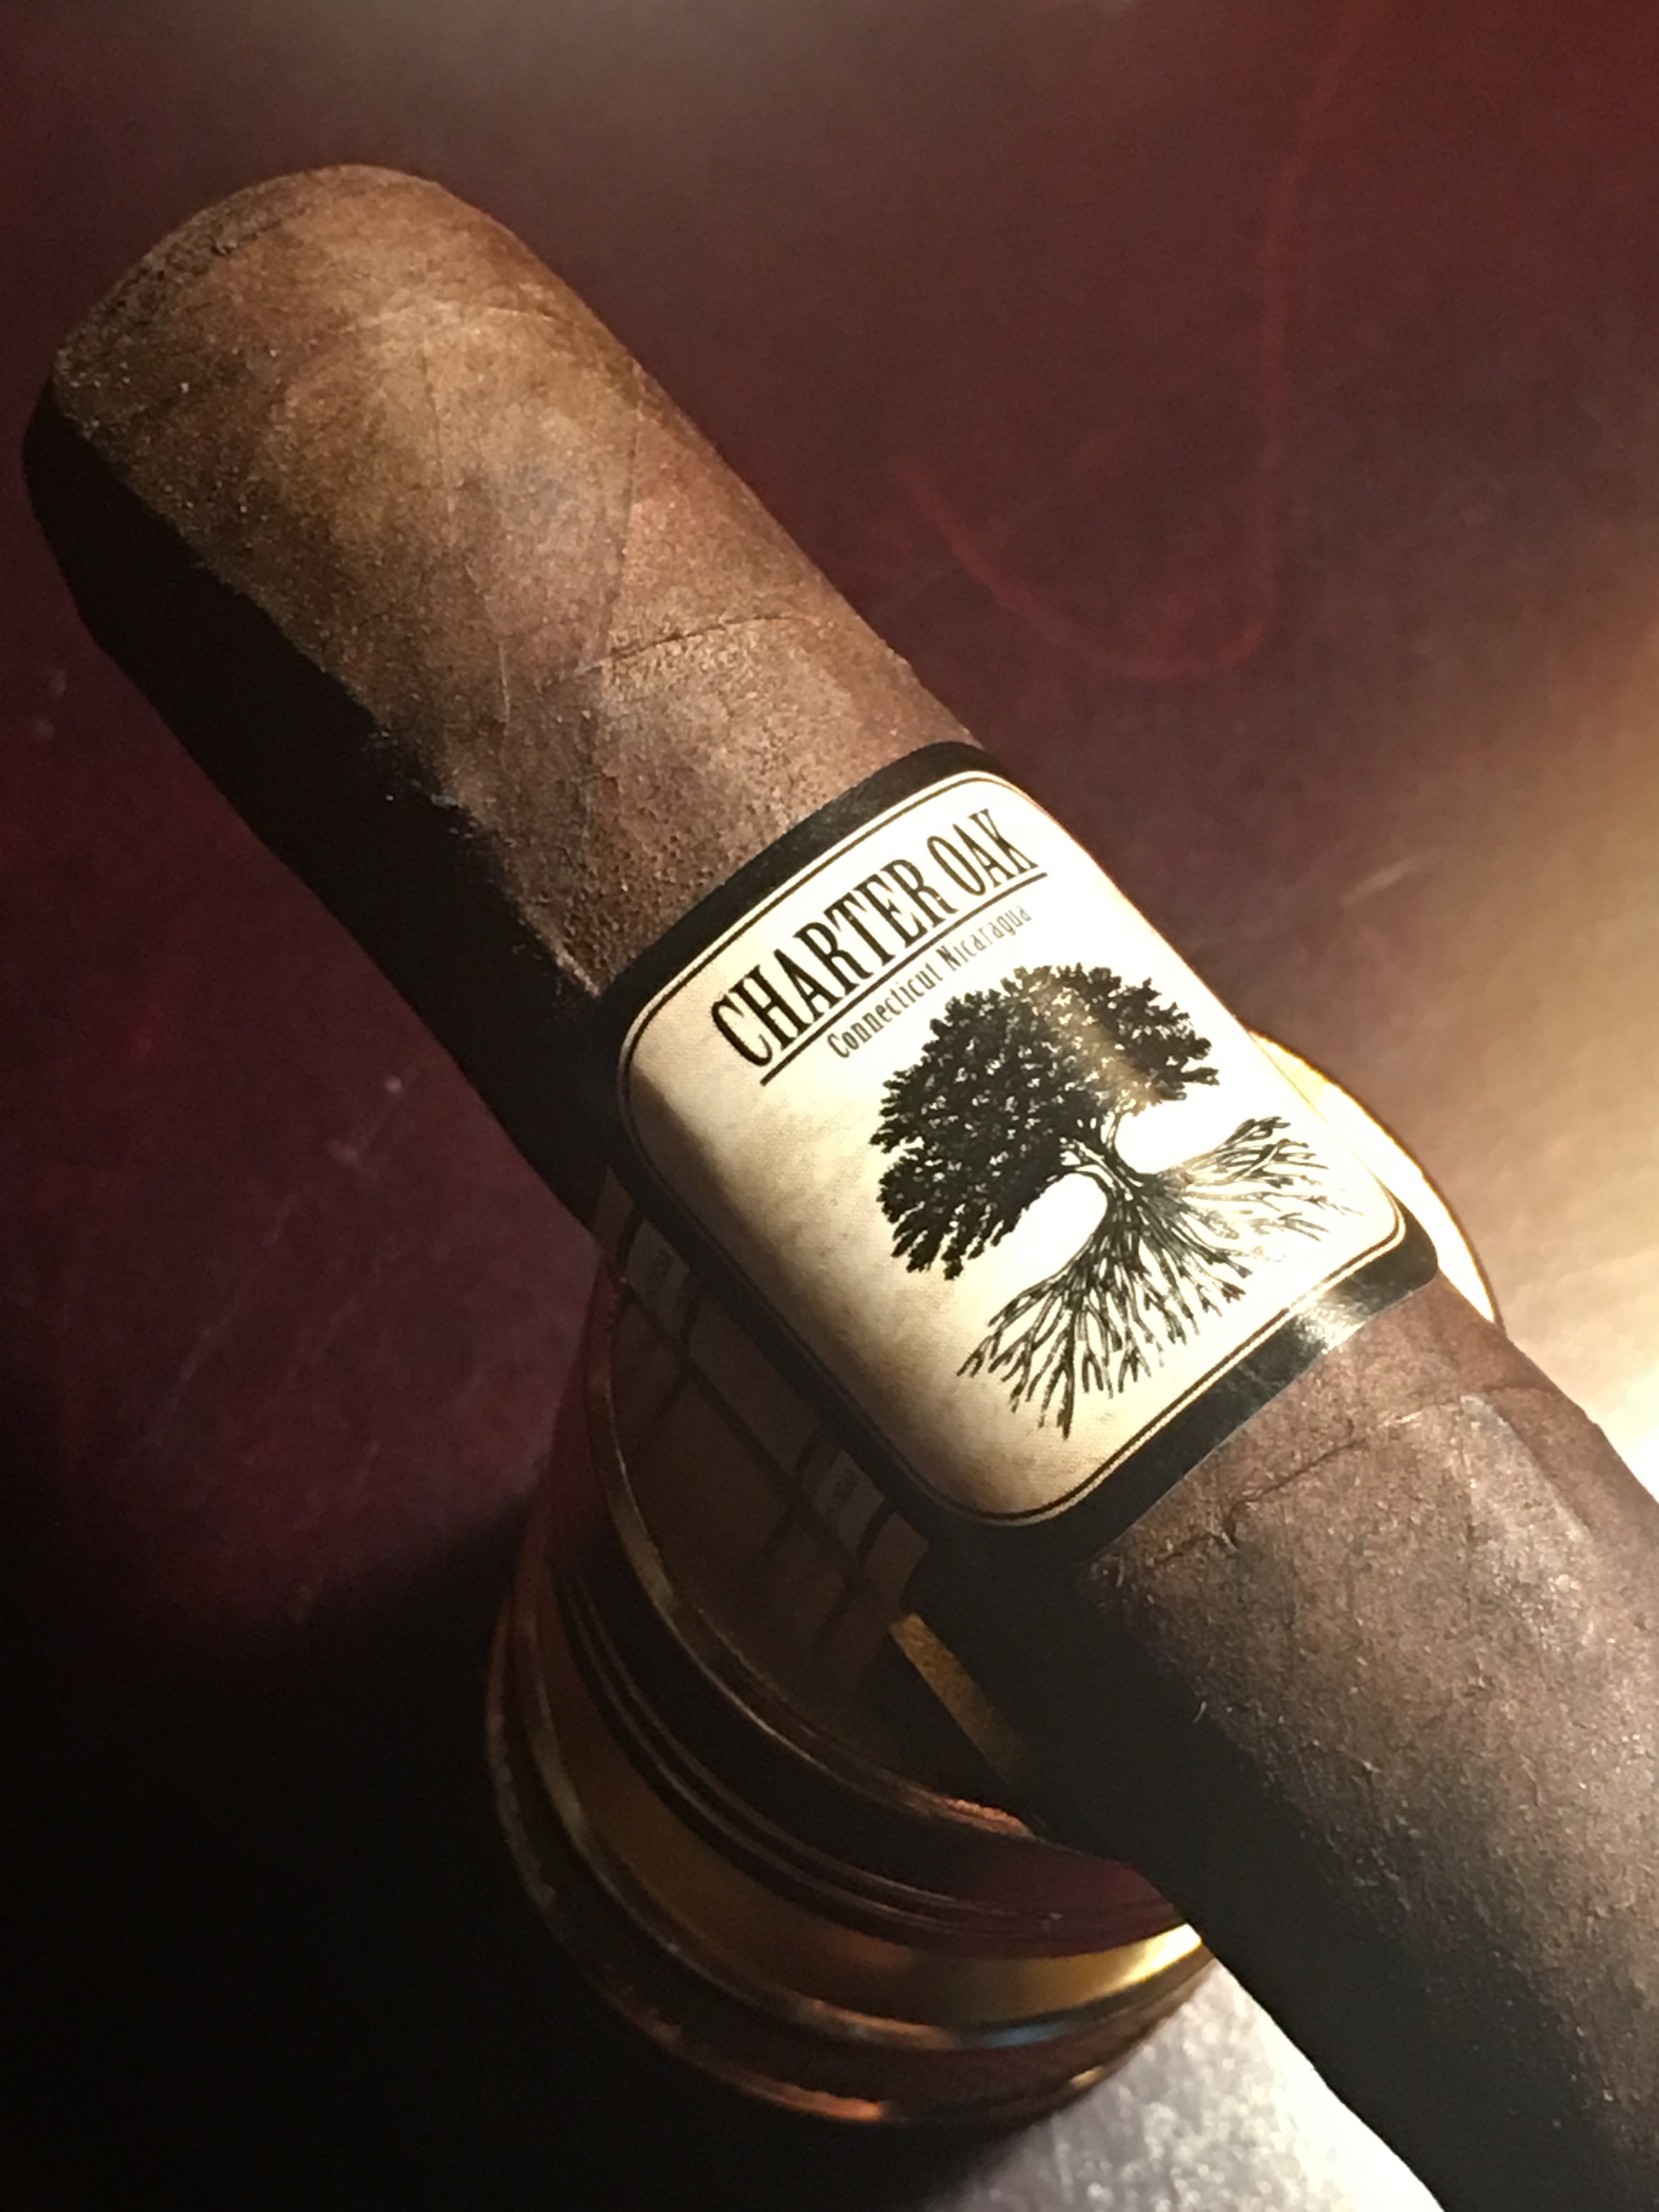 Foundation Cigars Charter Oak Maduro Rothschild